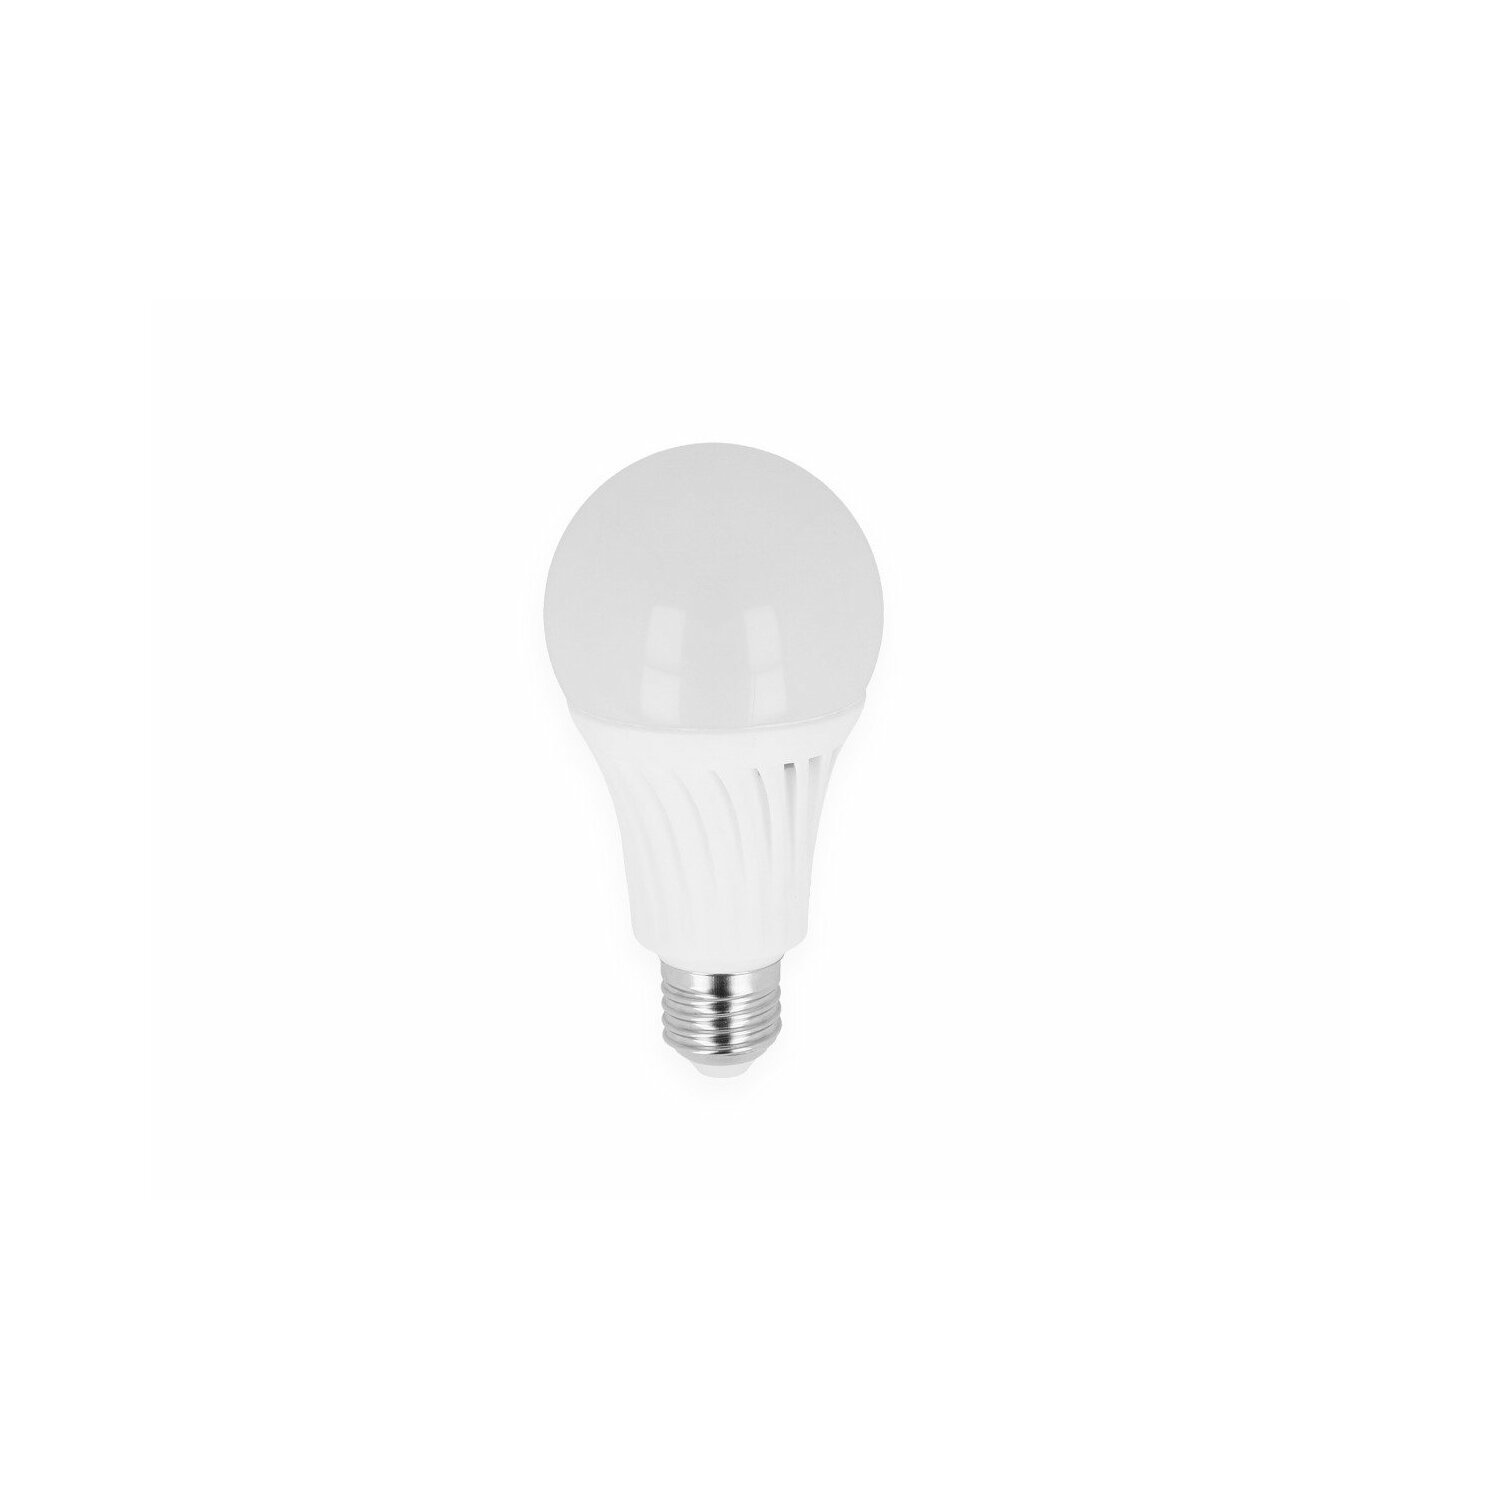 LED LINE lm 2x Leuchtmittel Warmweiß E27 LED 18W Ceramic 1800 LED